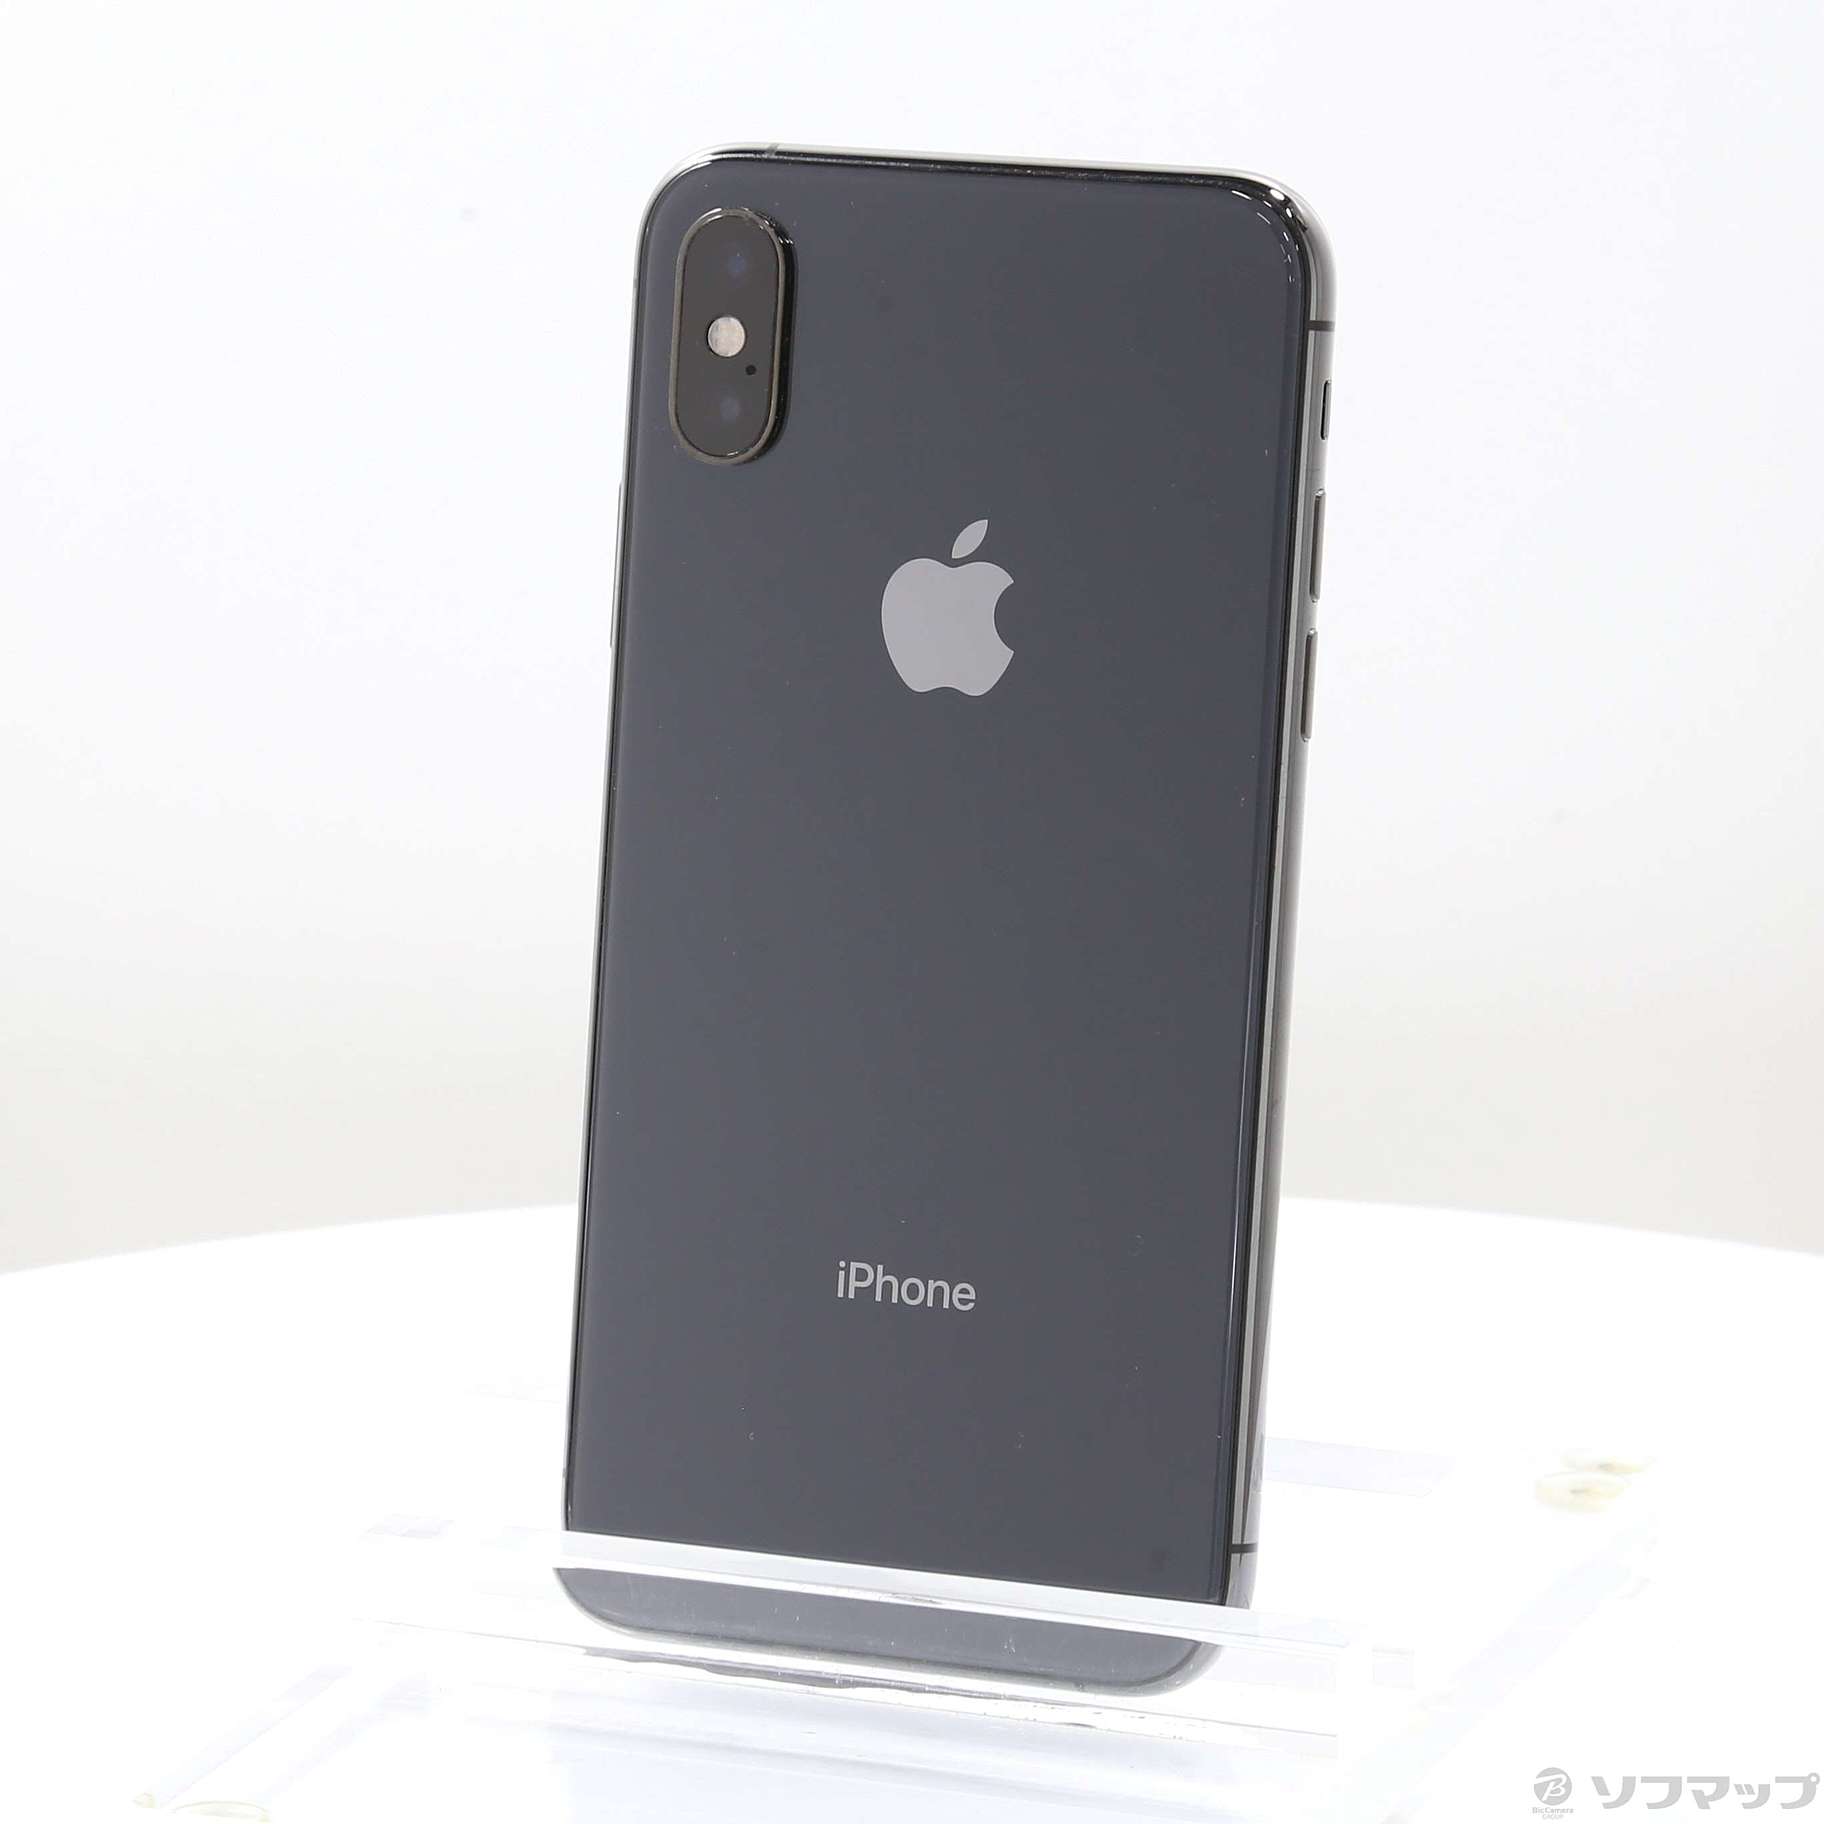 iPhone XS 64GB SIMフリー [スペースグレイ] 中古(白ロム)価格比較 - 価格.com